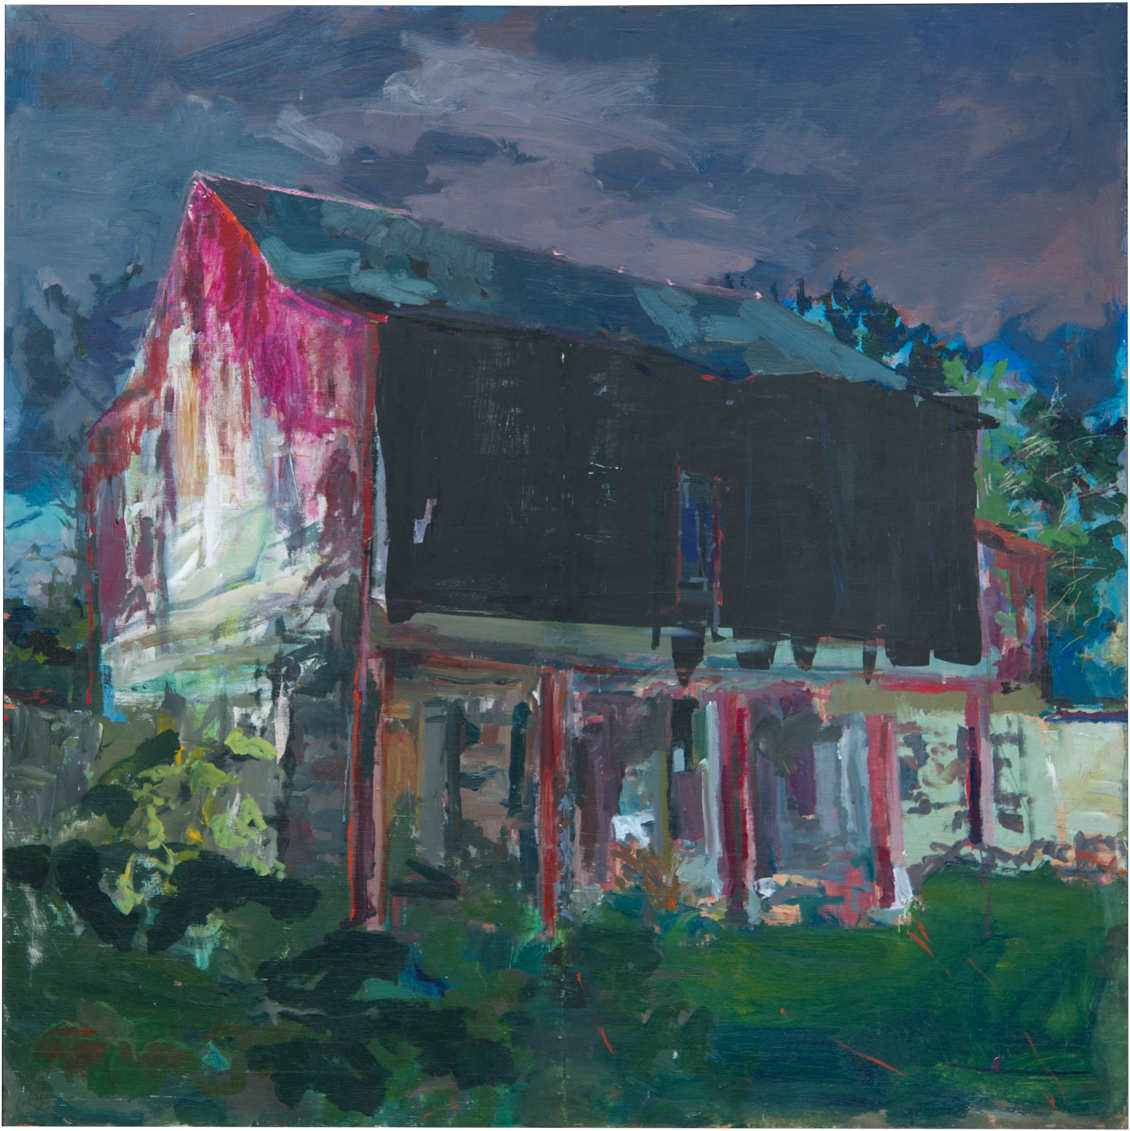  The Red Barn Acrylic on Panel  48” x 48”     